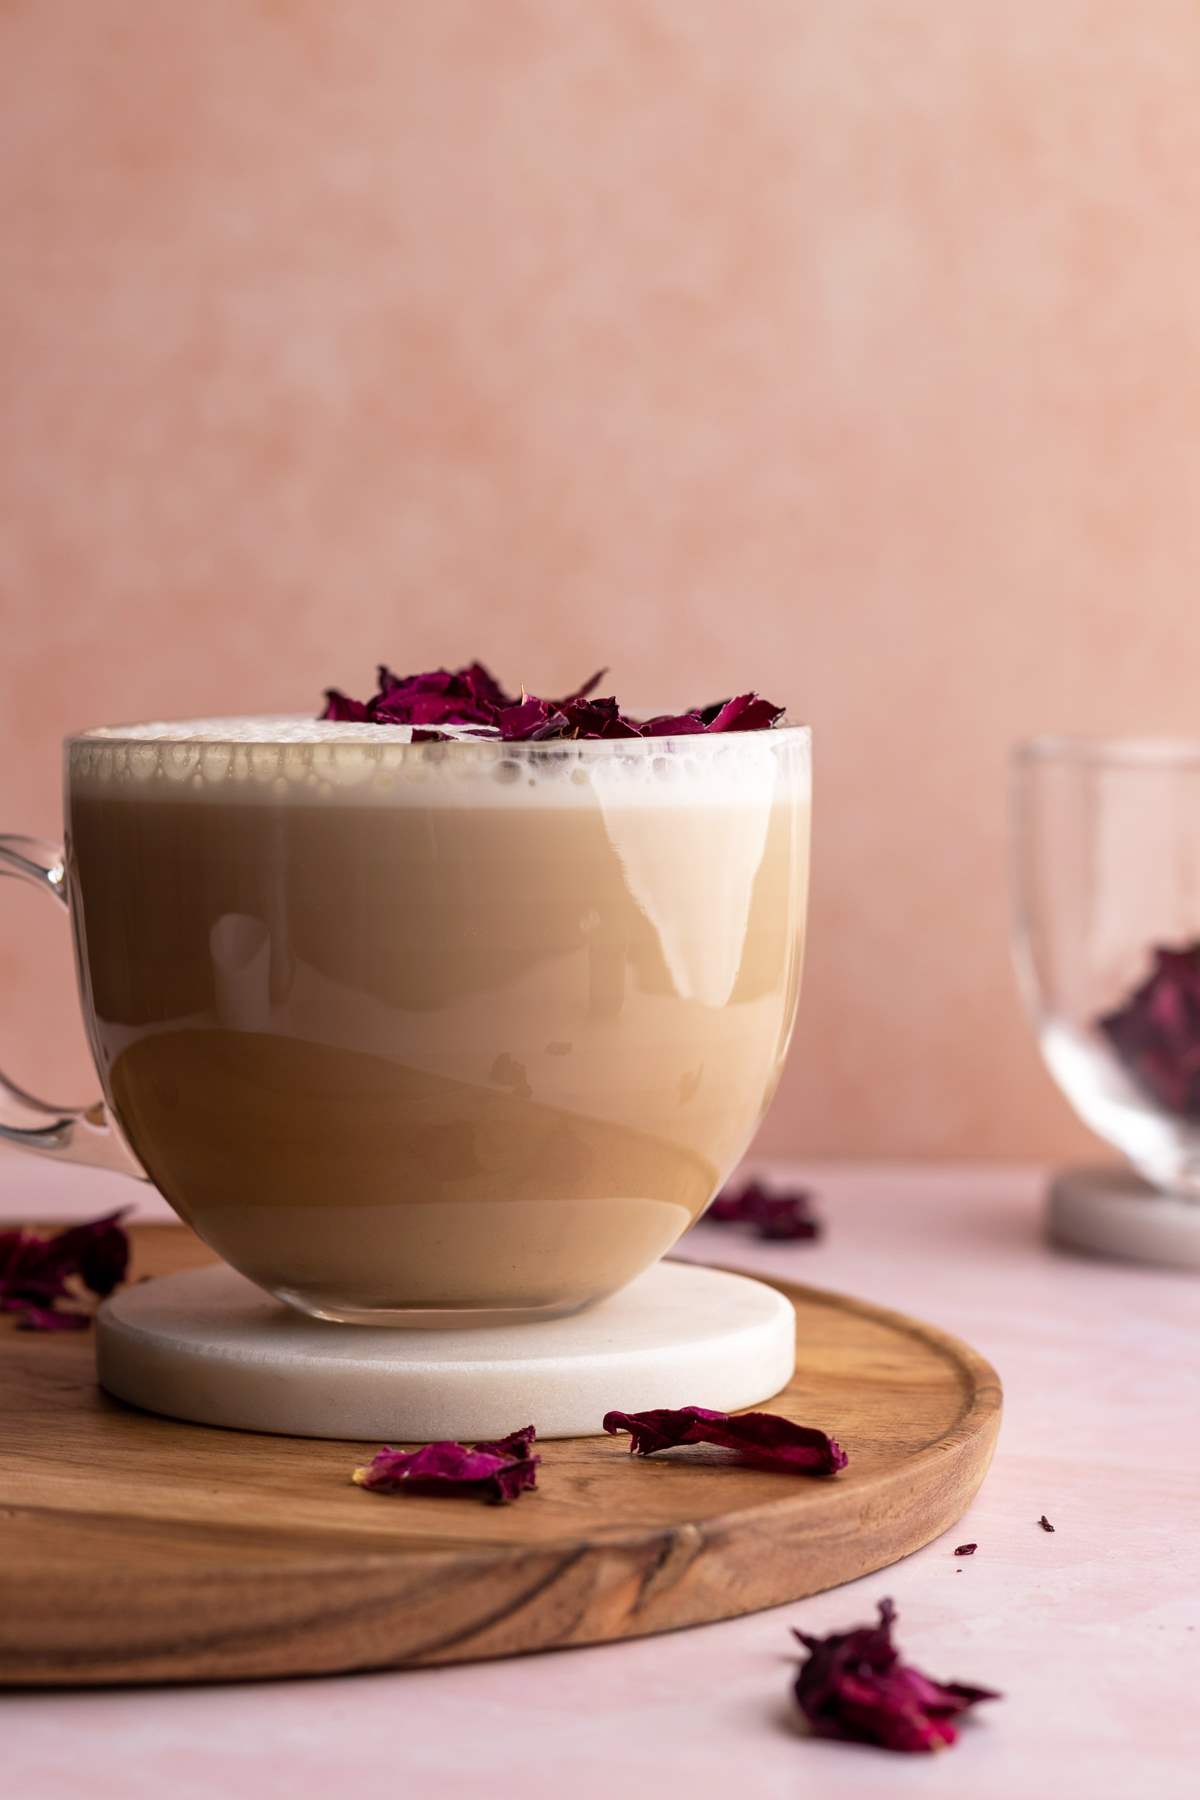 Rose latte in a mug with dry rose petals.